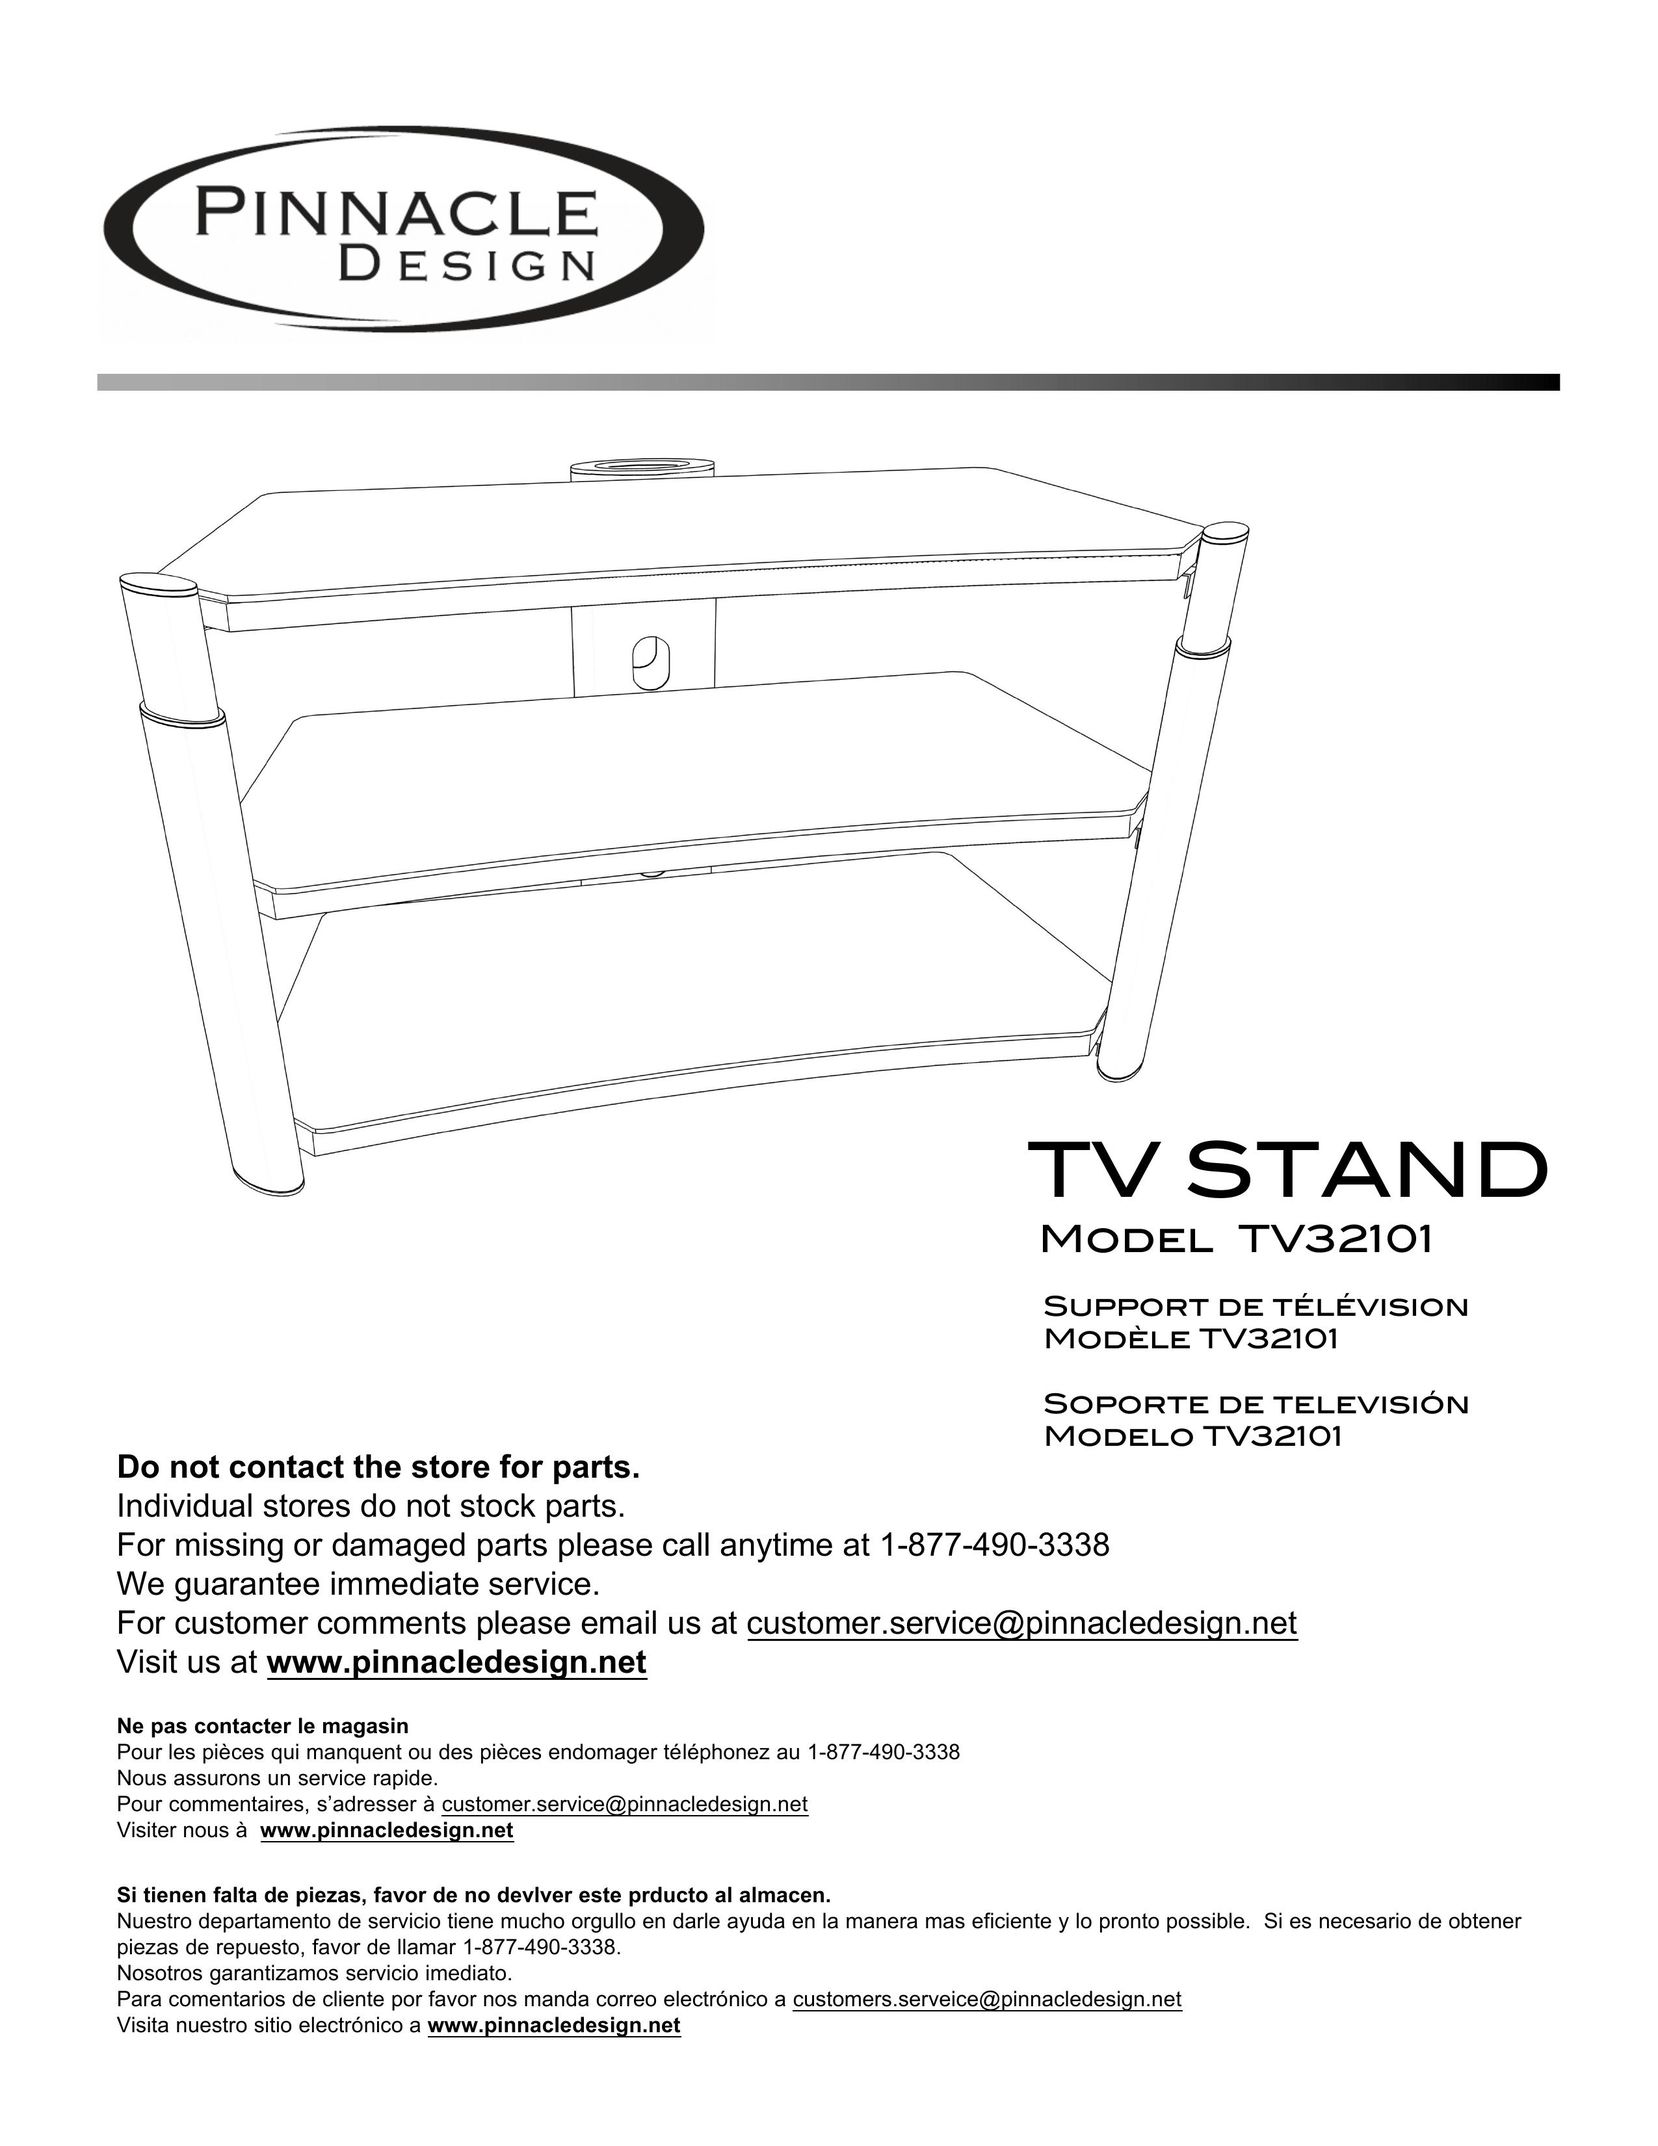 Pinnacle Design TV32101 TV Video Accessories User Manual